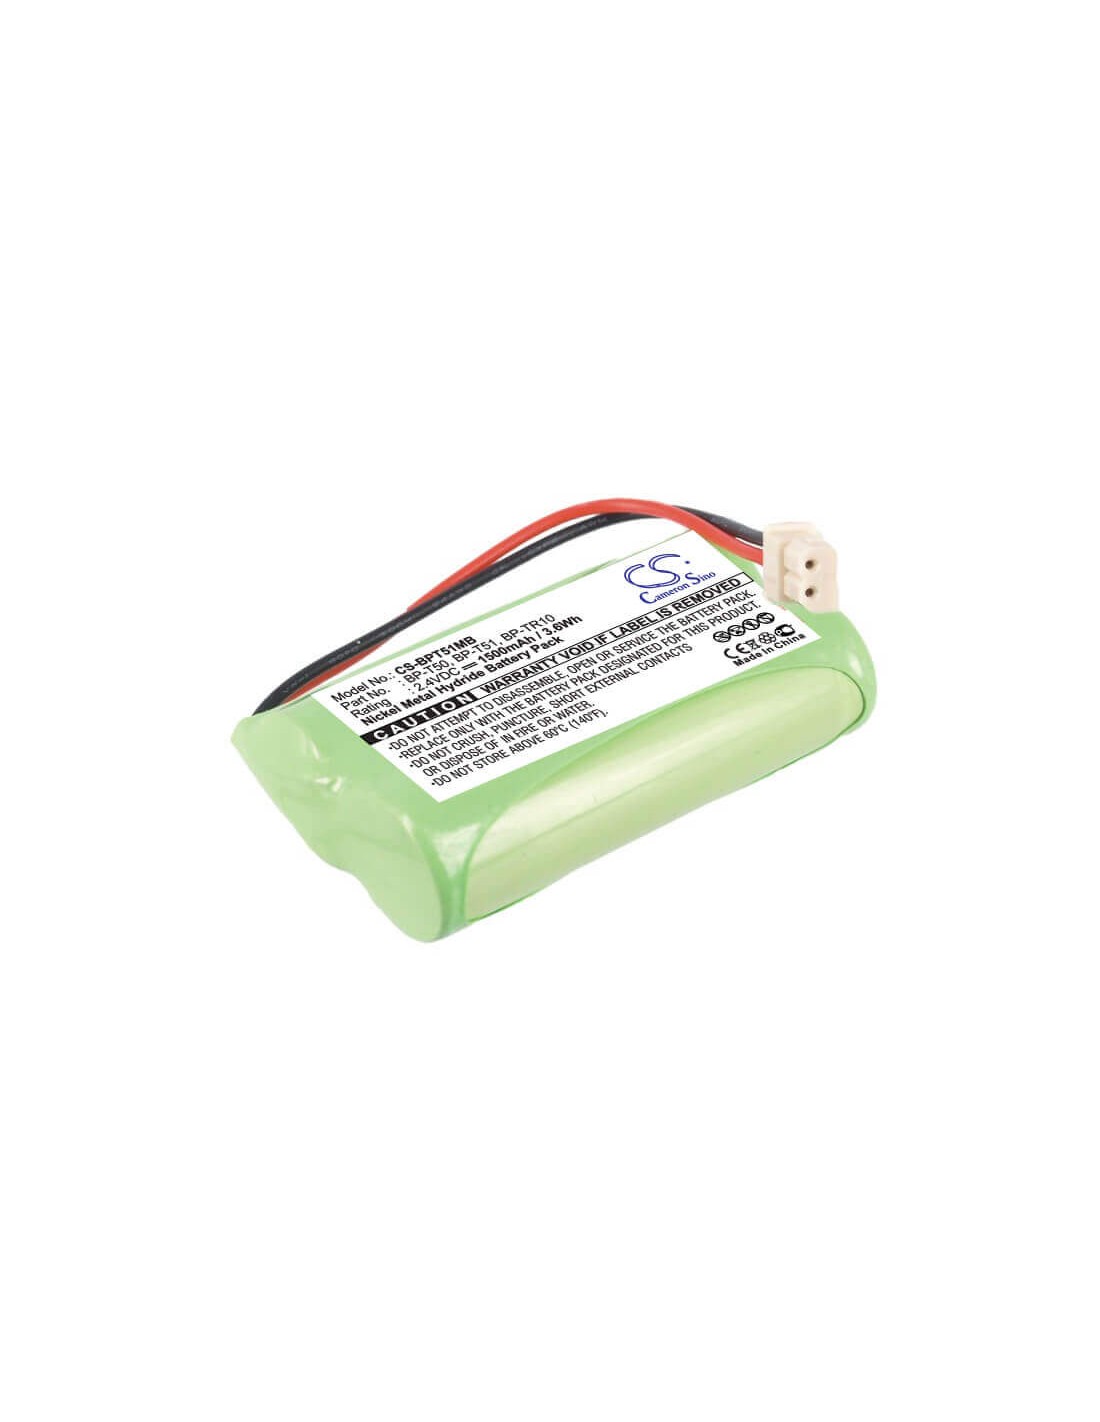 Battery for Sony, Ntm-910, Ntm-910 Baby Nursery Monitor 2.4V, 1500mAh - 3.60Wh